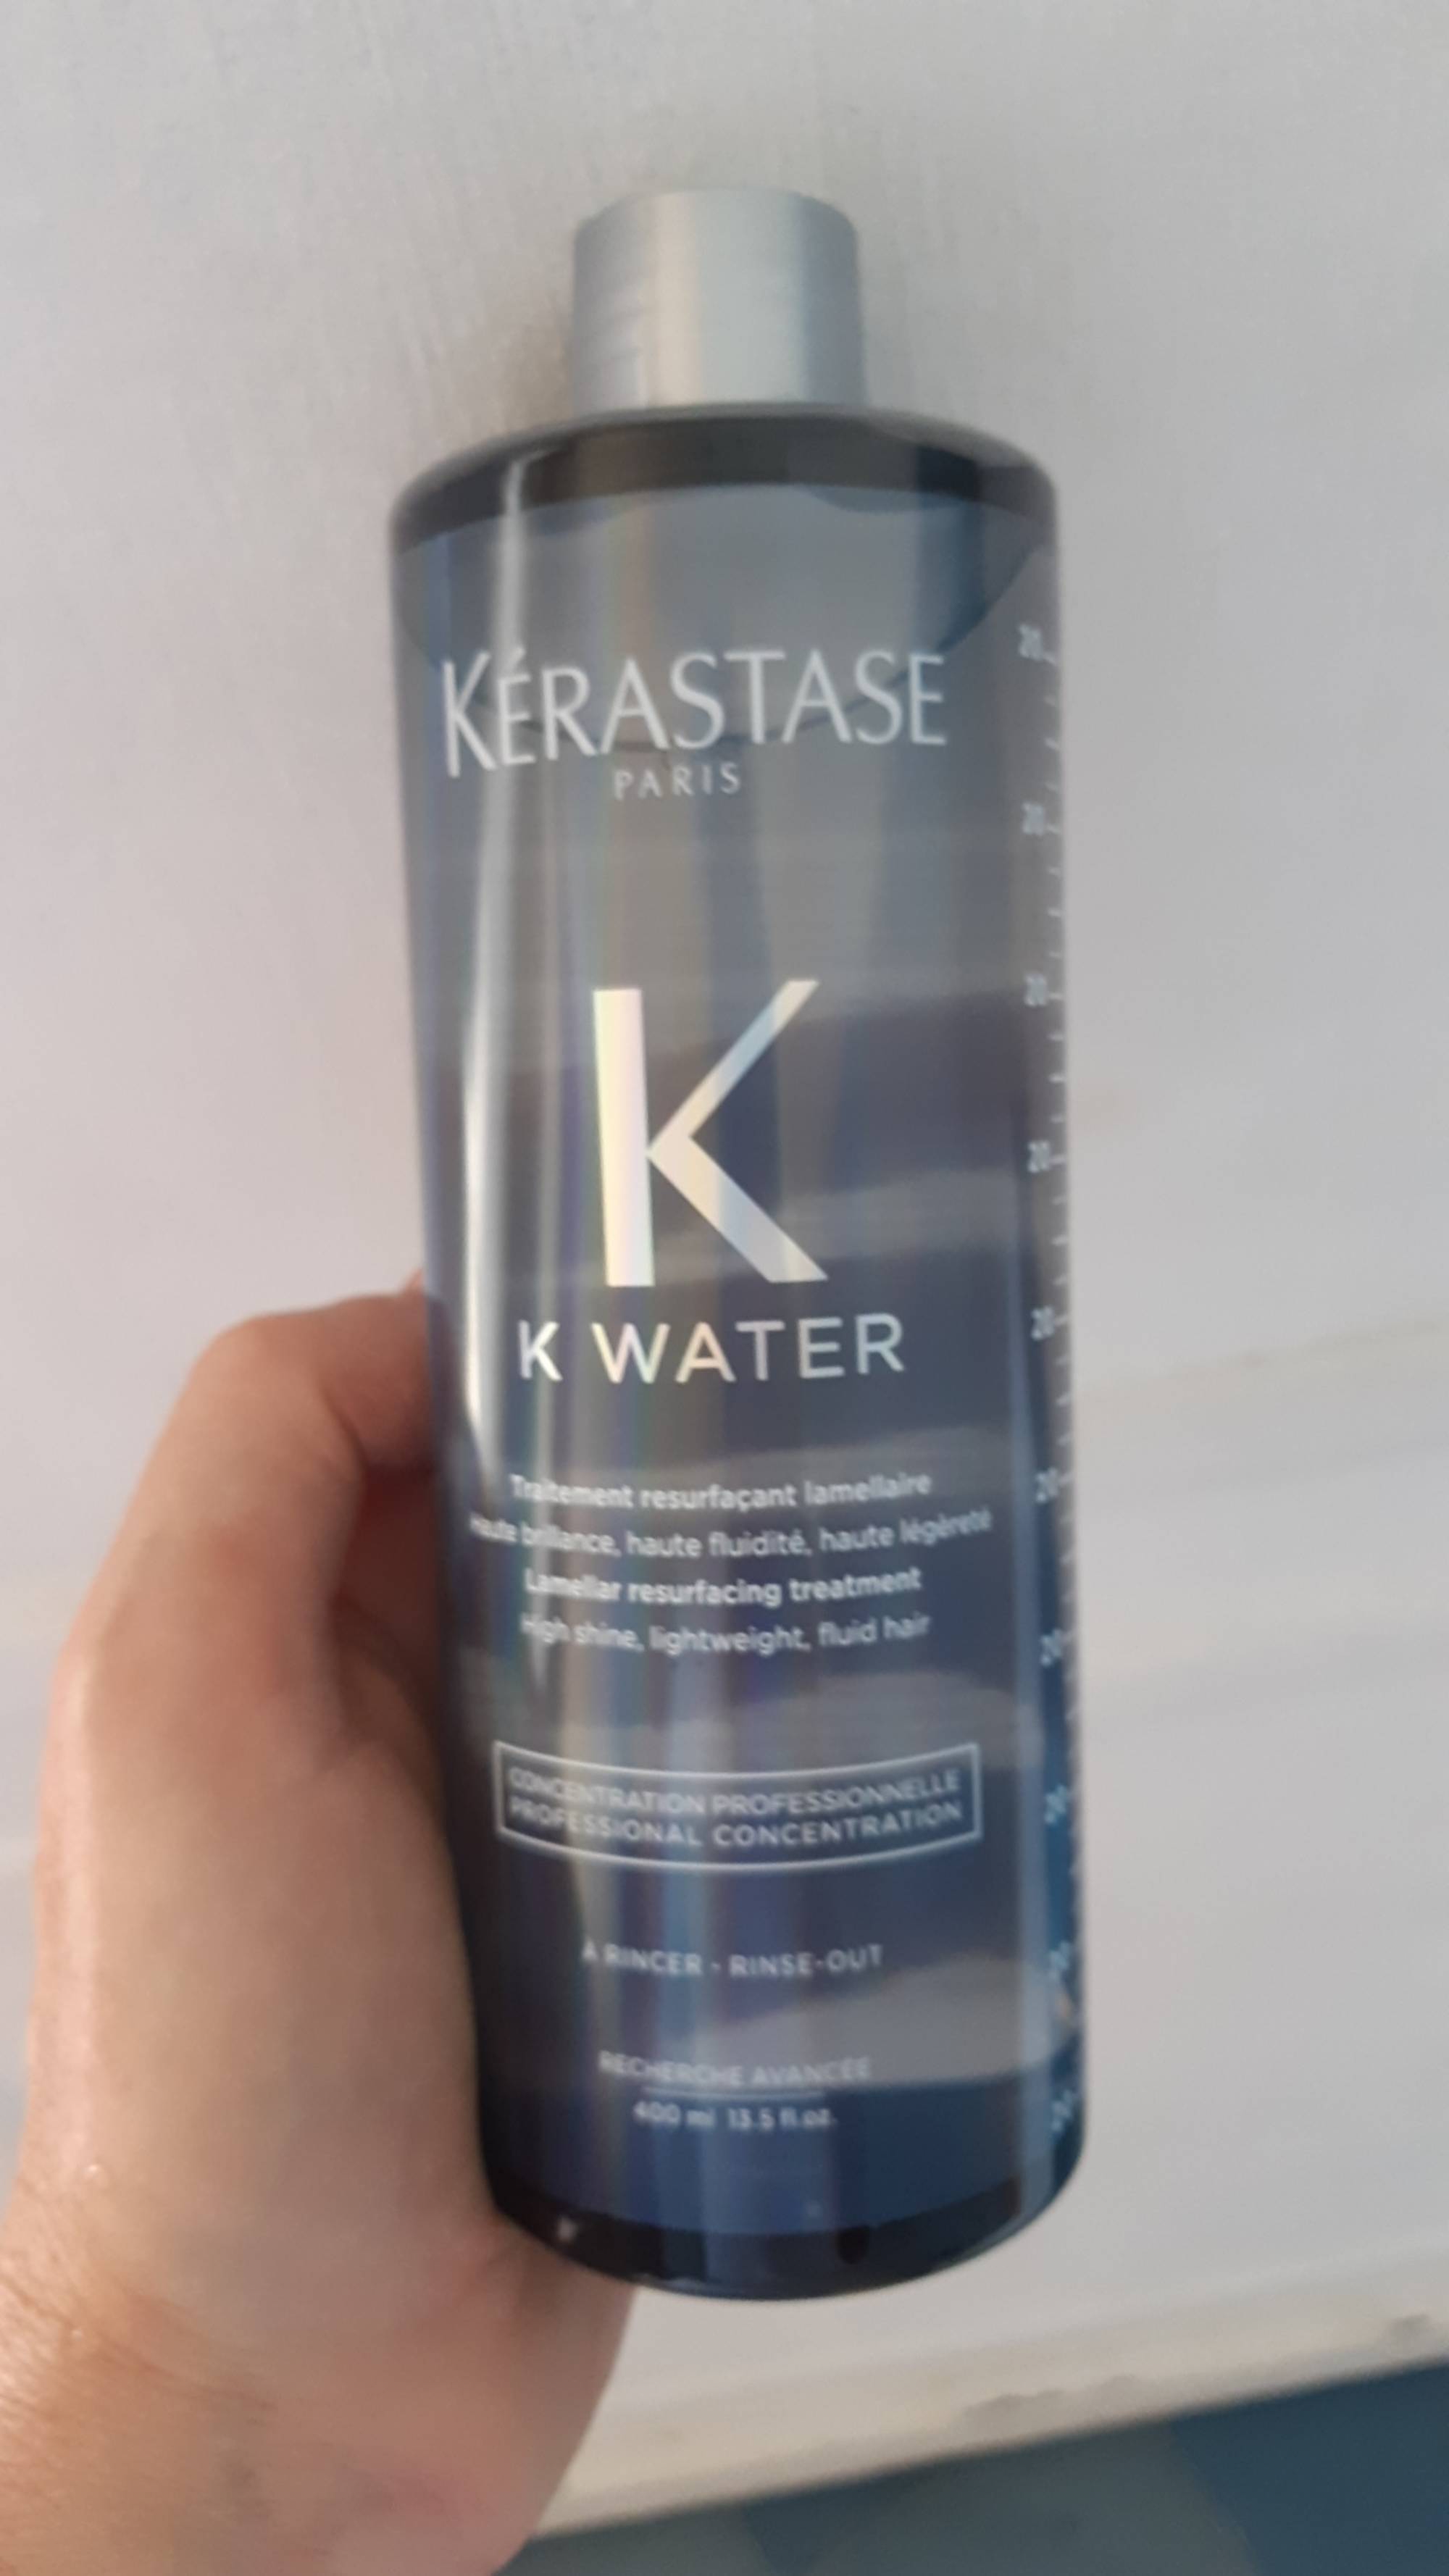 KÉRASTASE - K Water - Traitement resurfaçant lamellaire